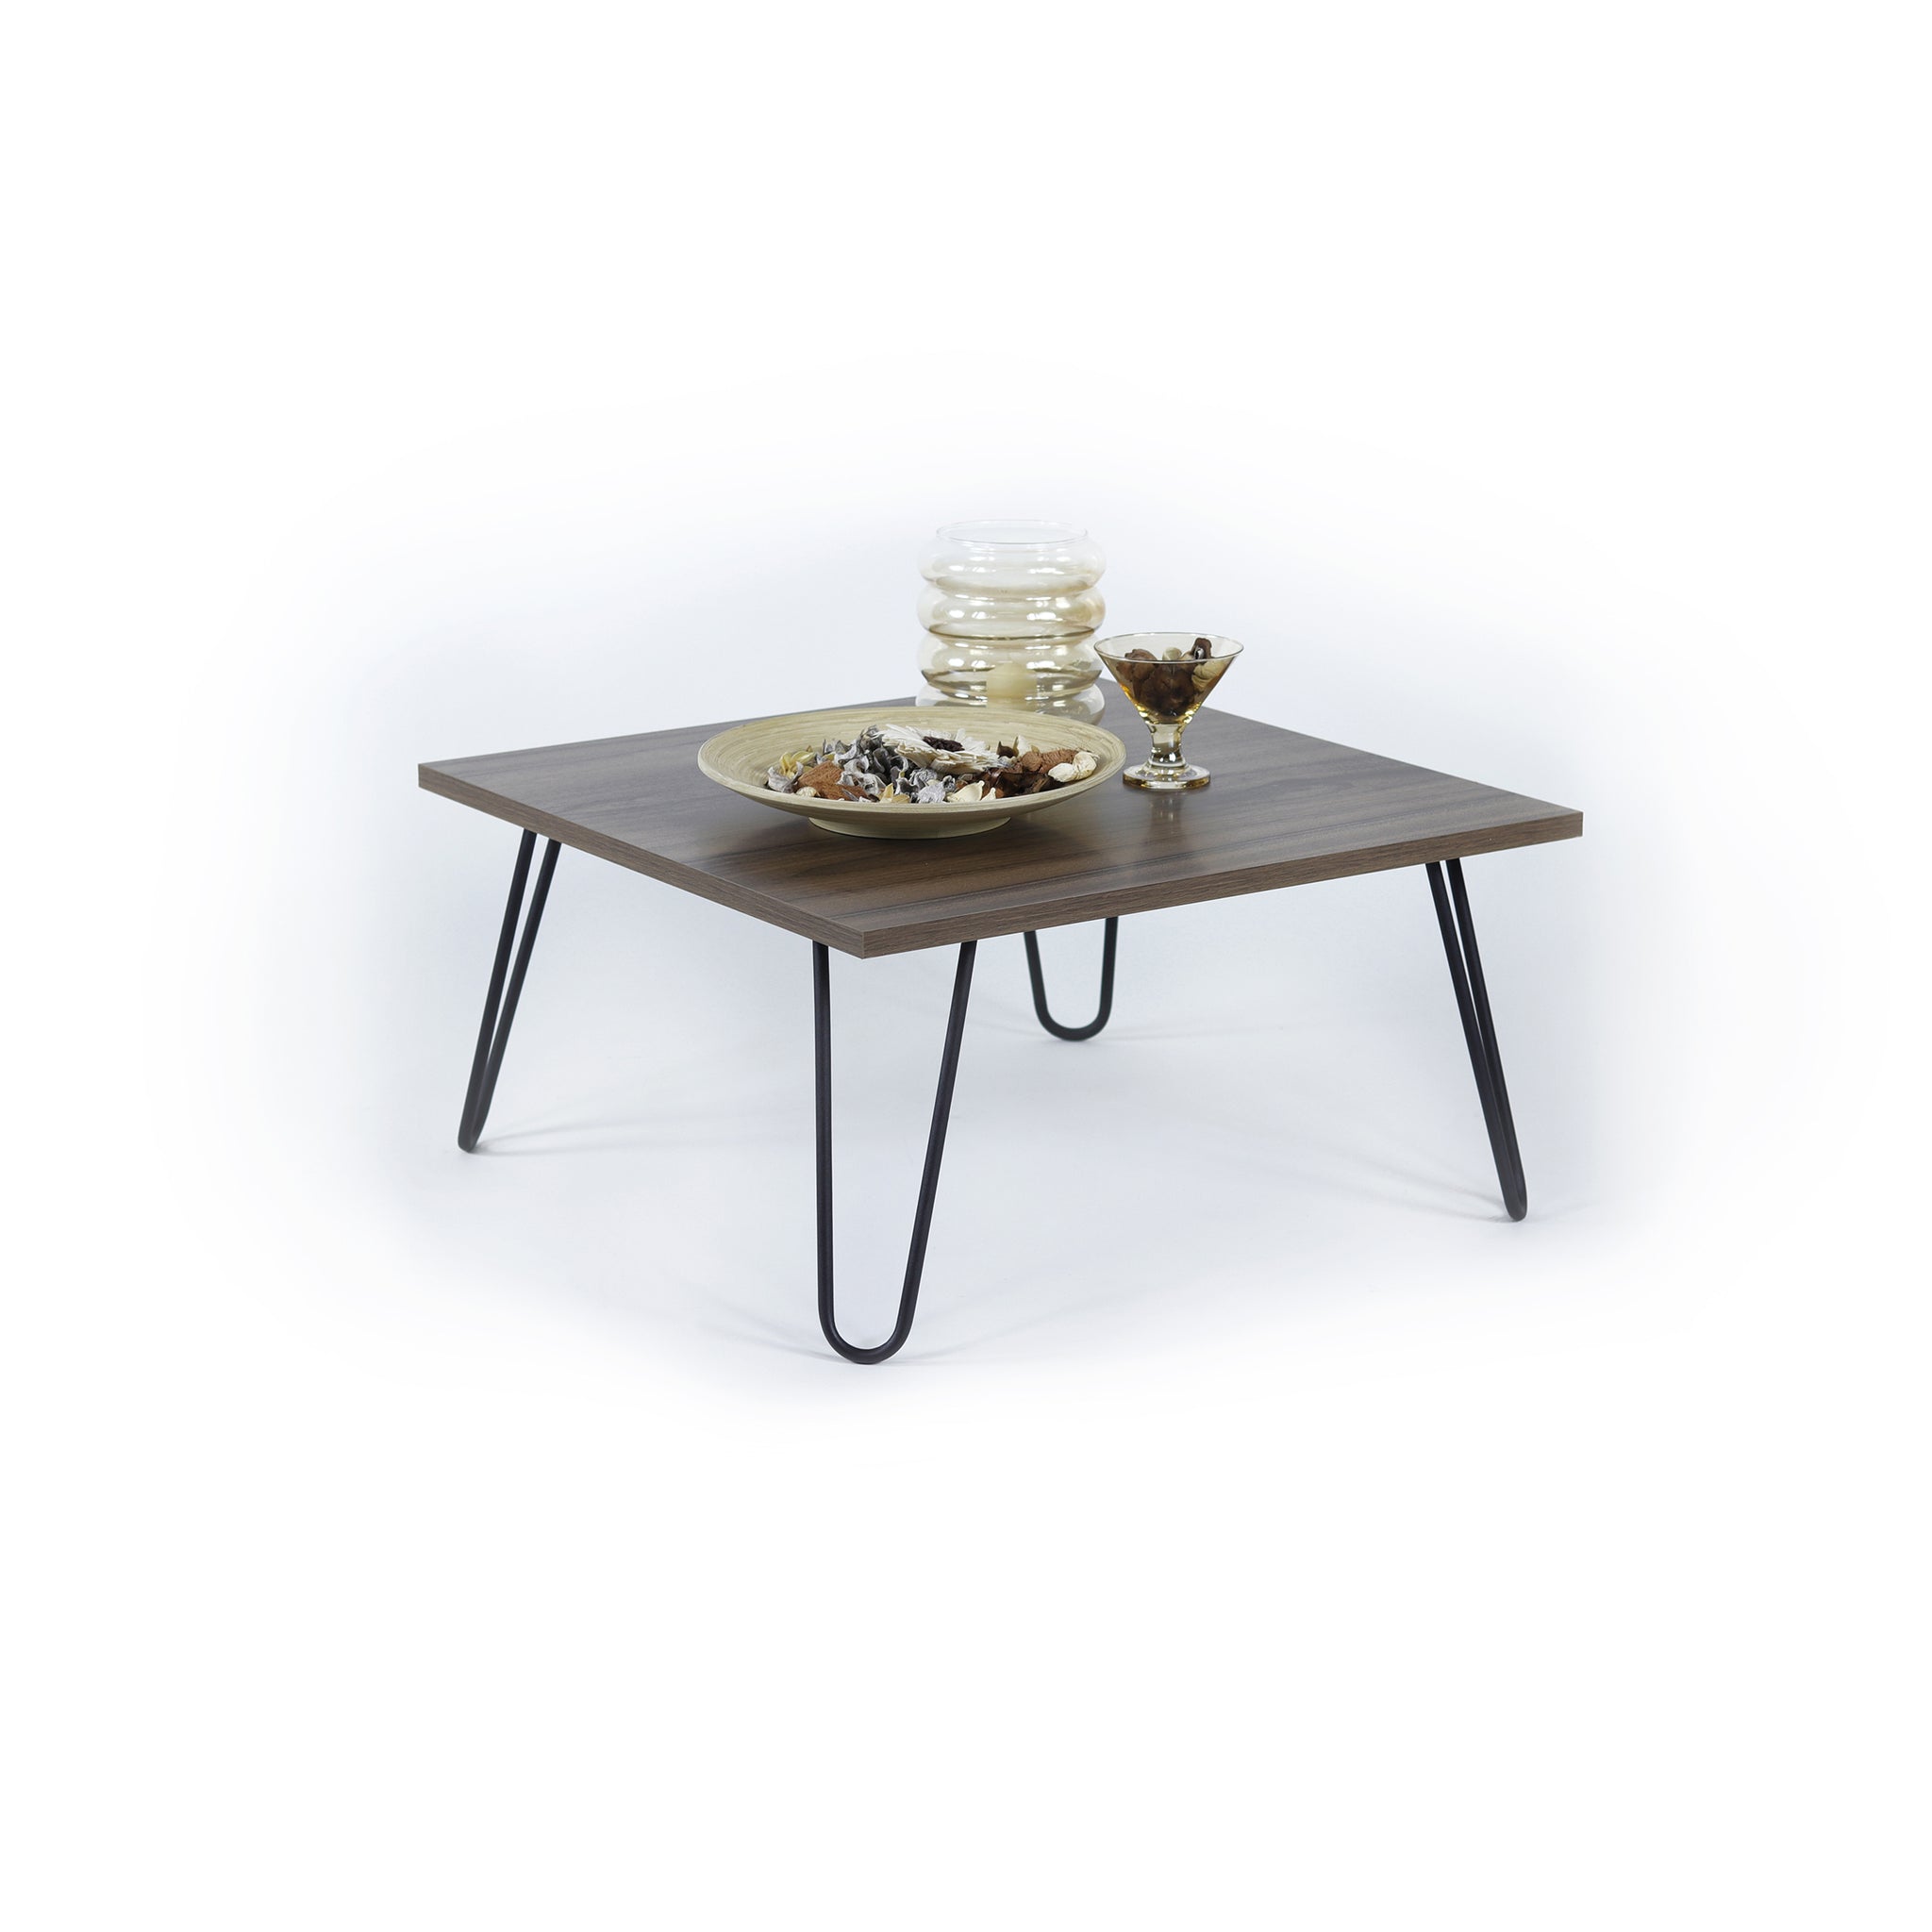 Lona 4 Metal Legs Coffee Table For Living Room